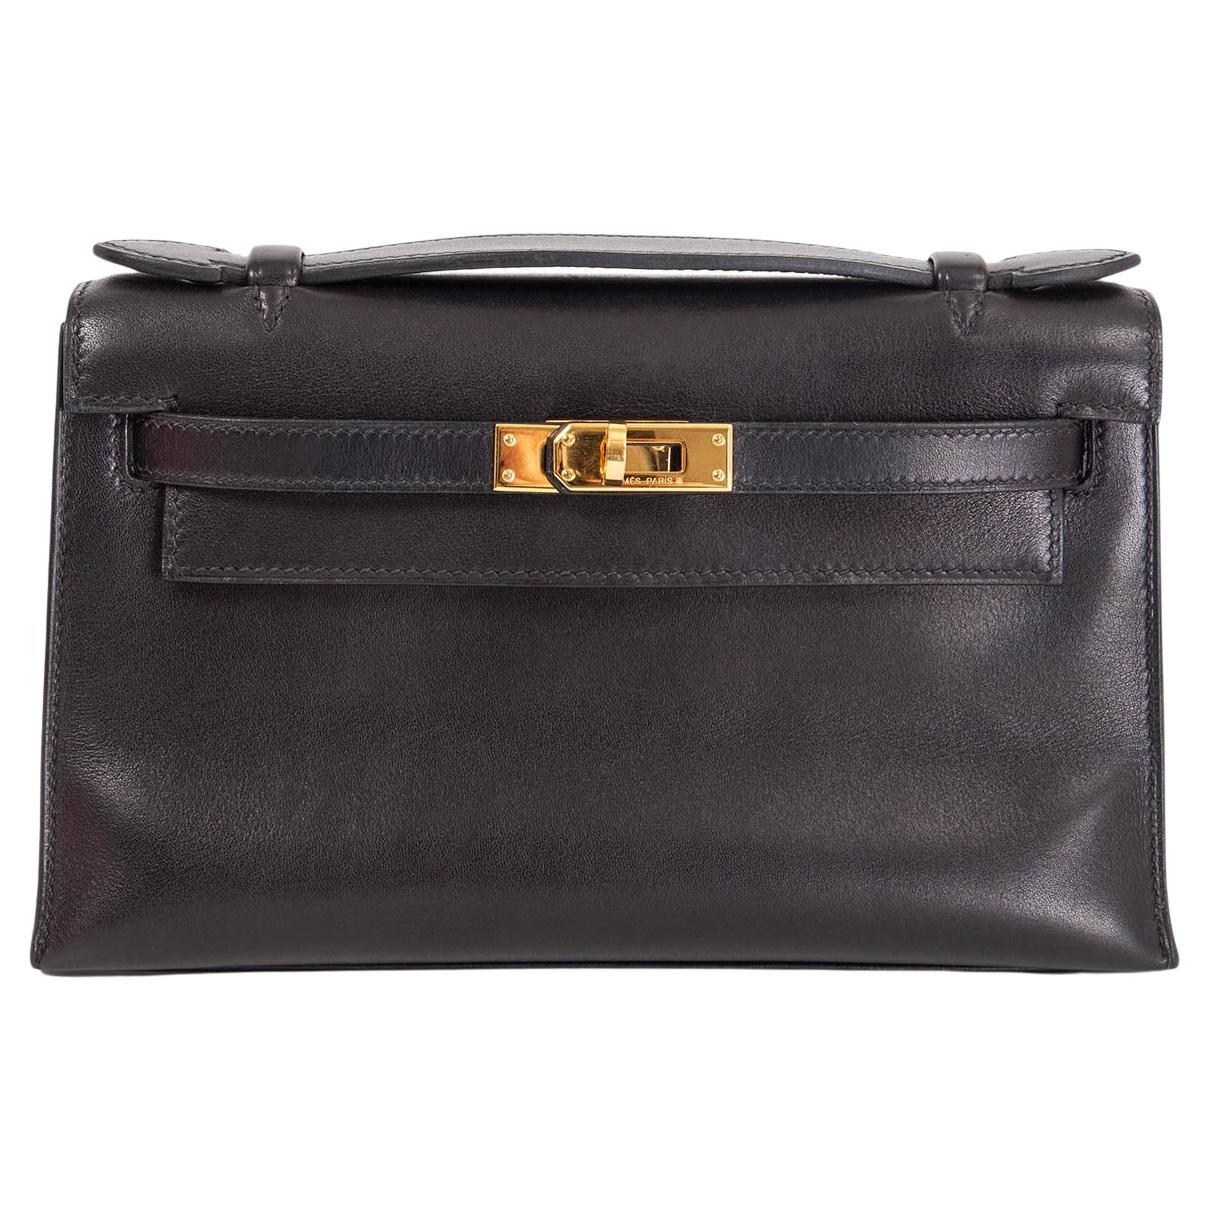 HERMES Noir black Swift leather KELLY POCHETTE Clutch Bag Gold